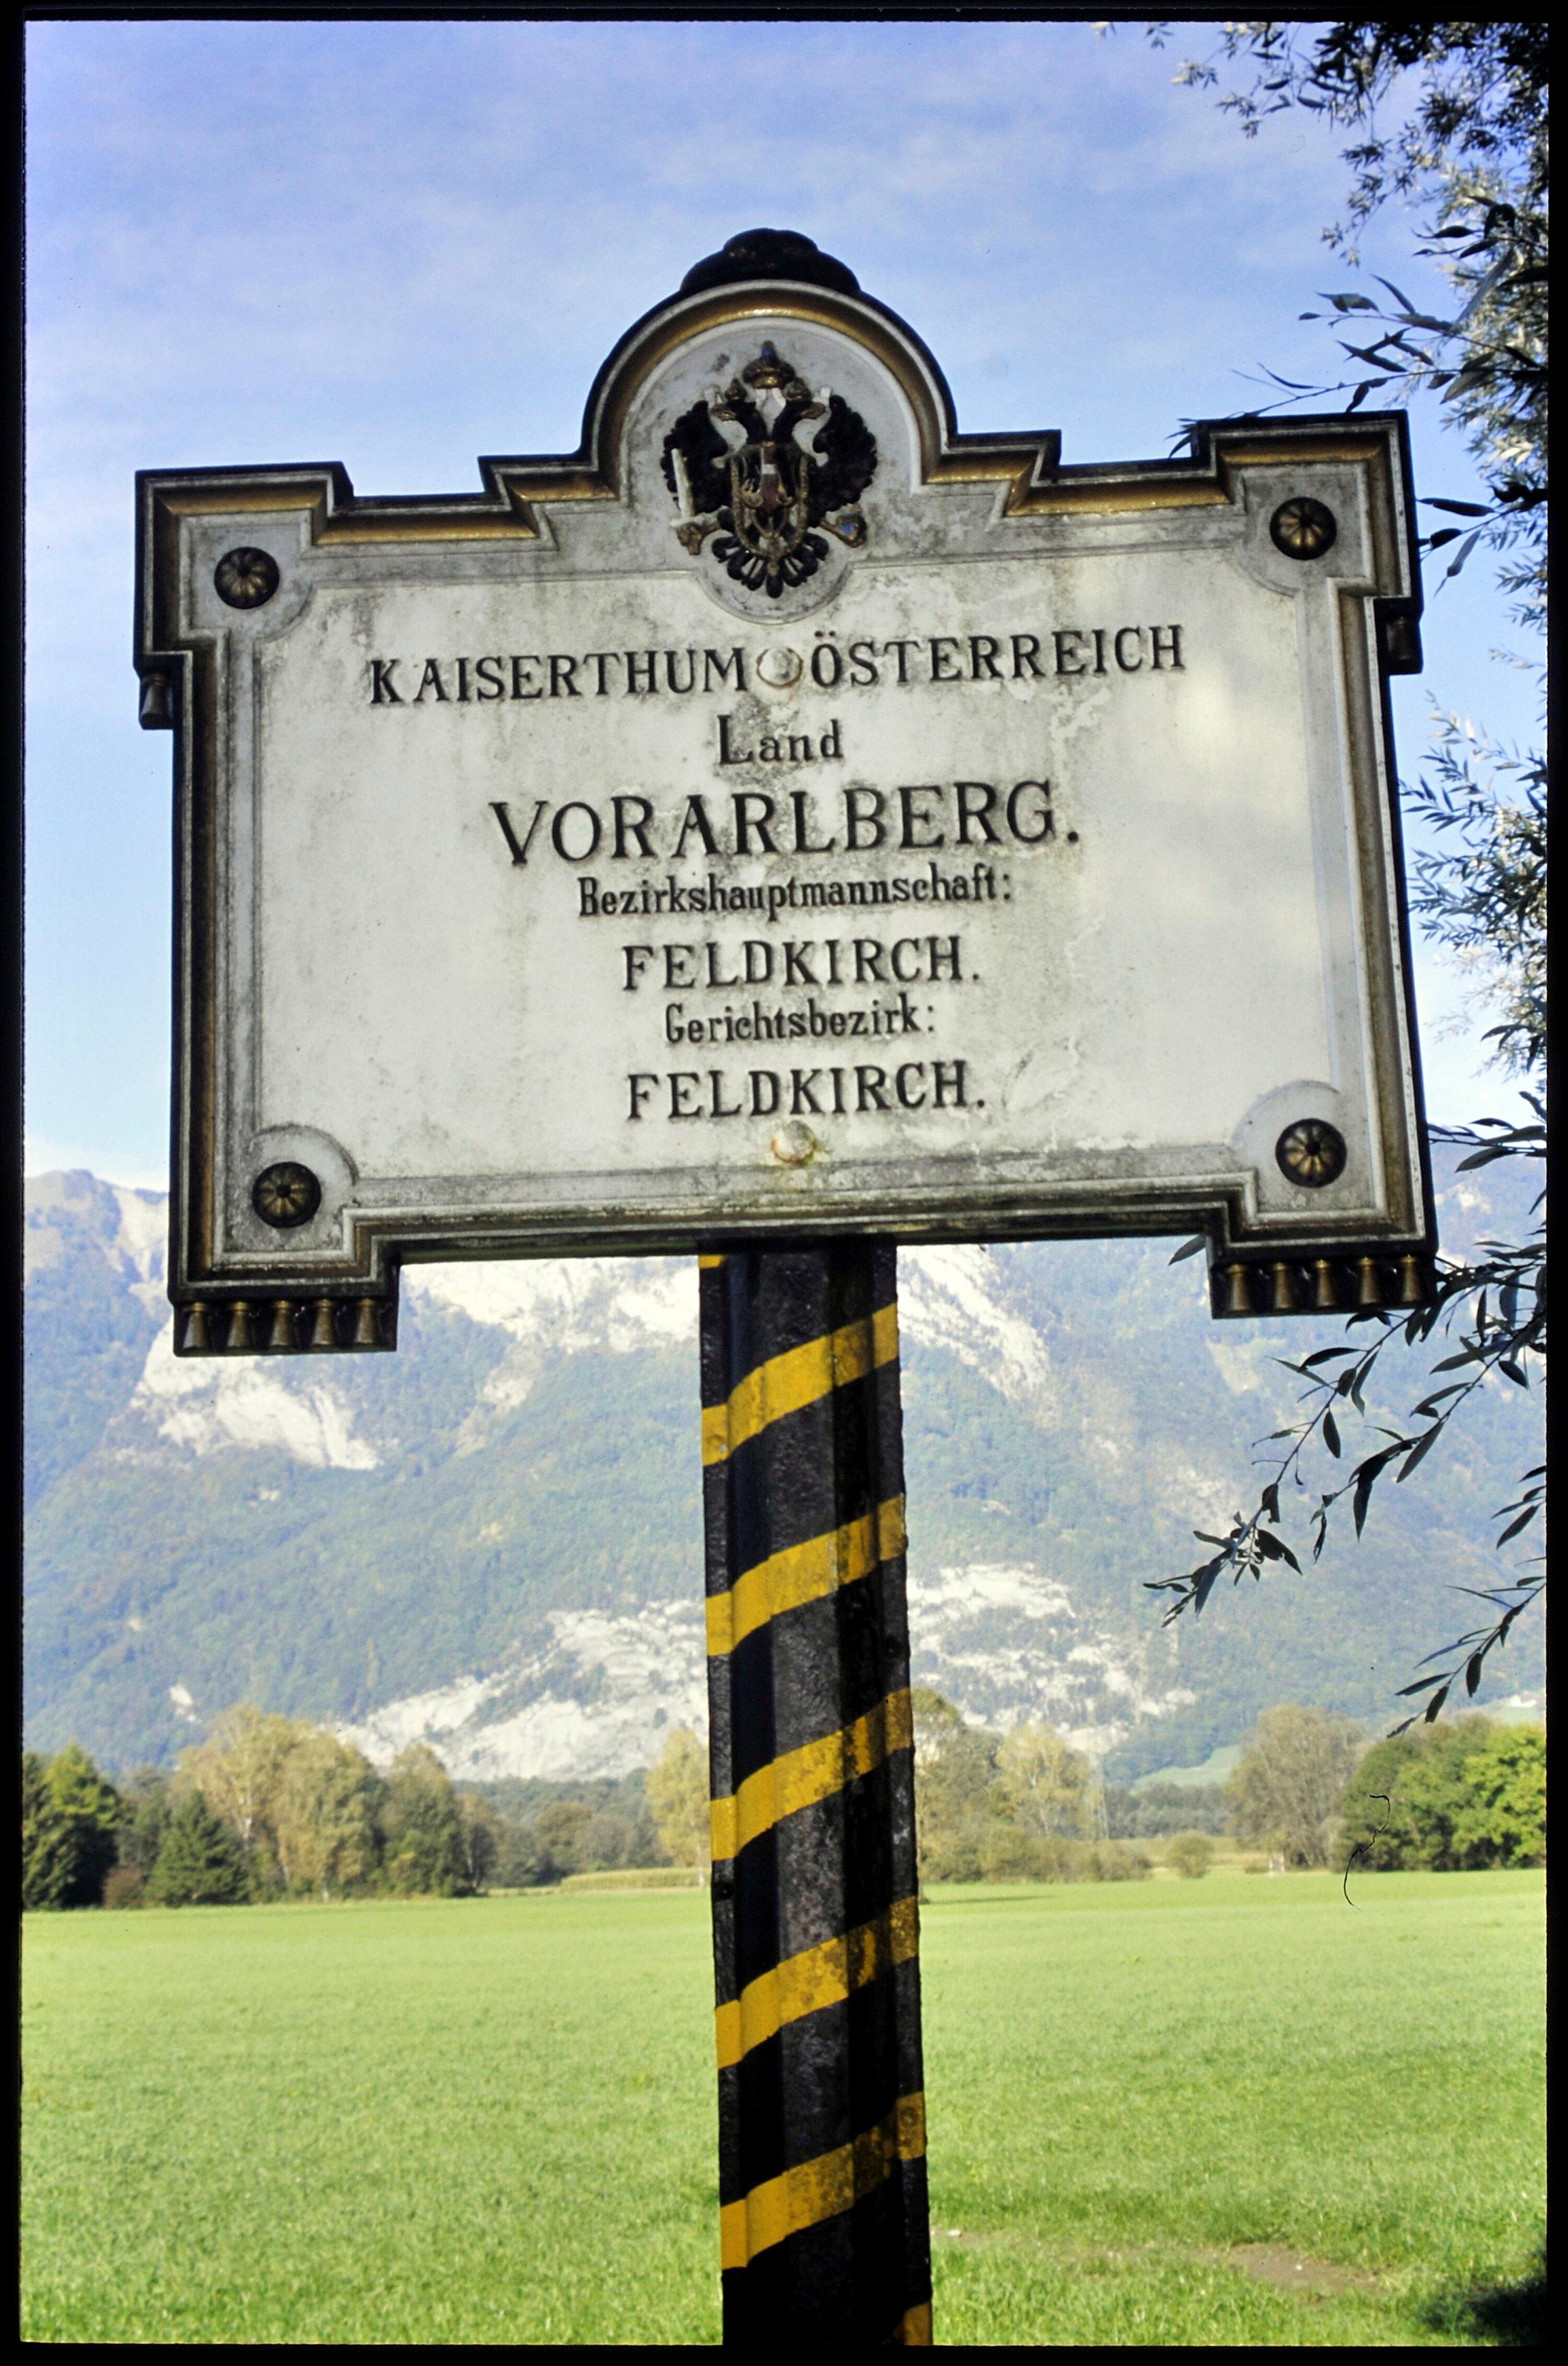 [Feldkirch, alte Grenztafel in Bangs]></div>


    <hr>
    <div class=